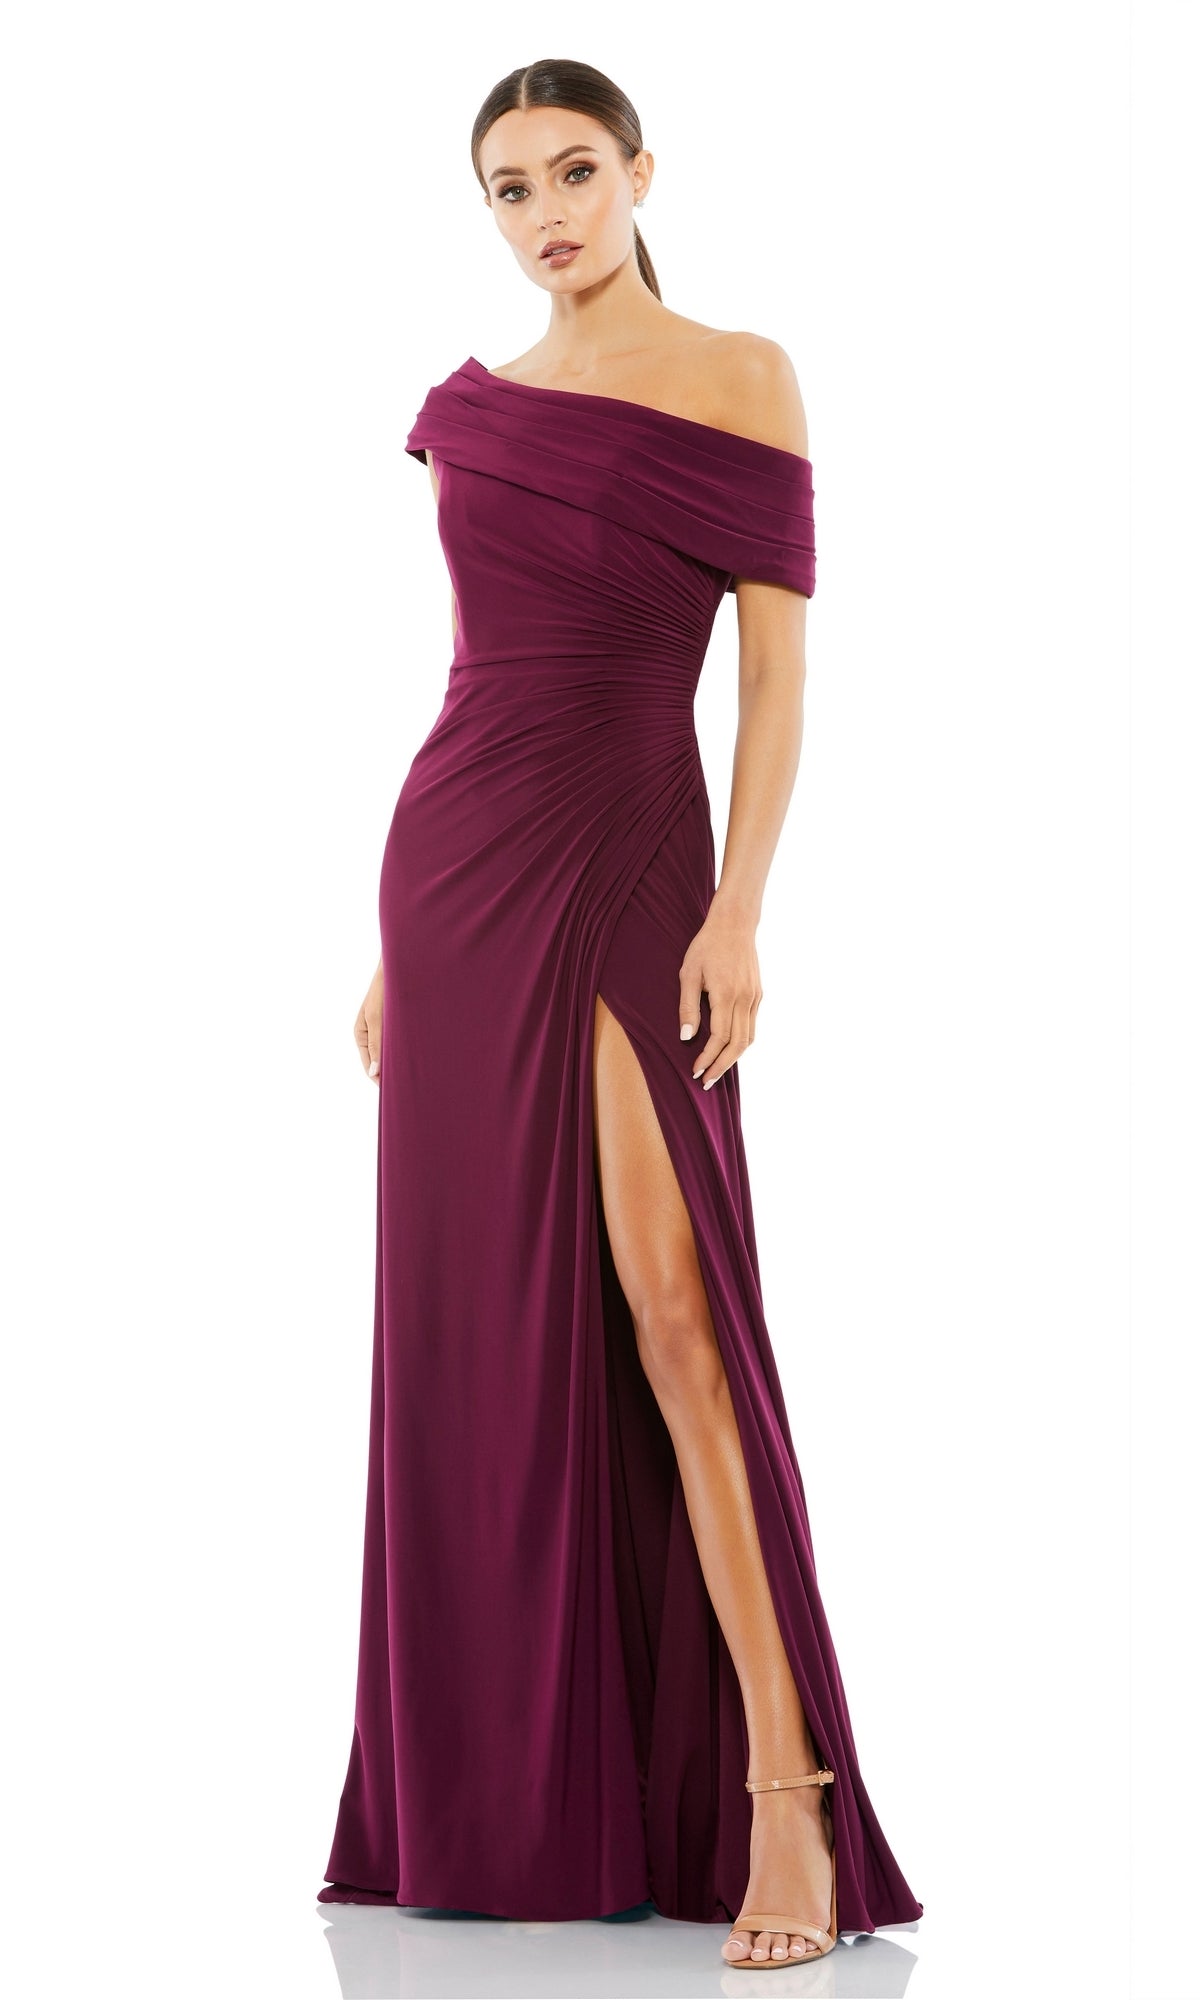 Long Formal Dress 26517 by Mac Duggal